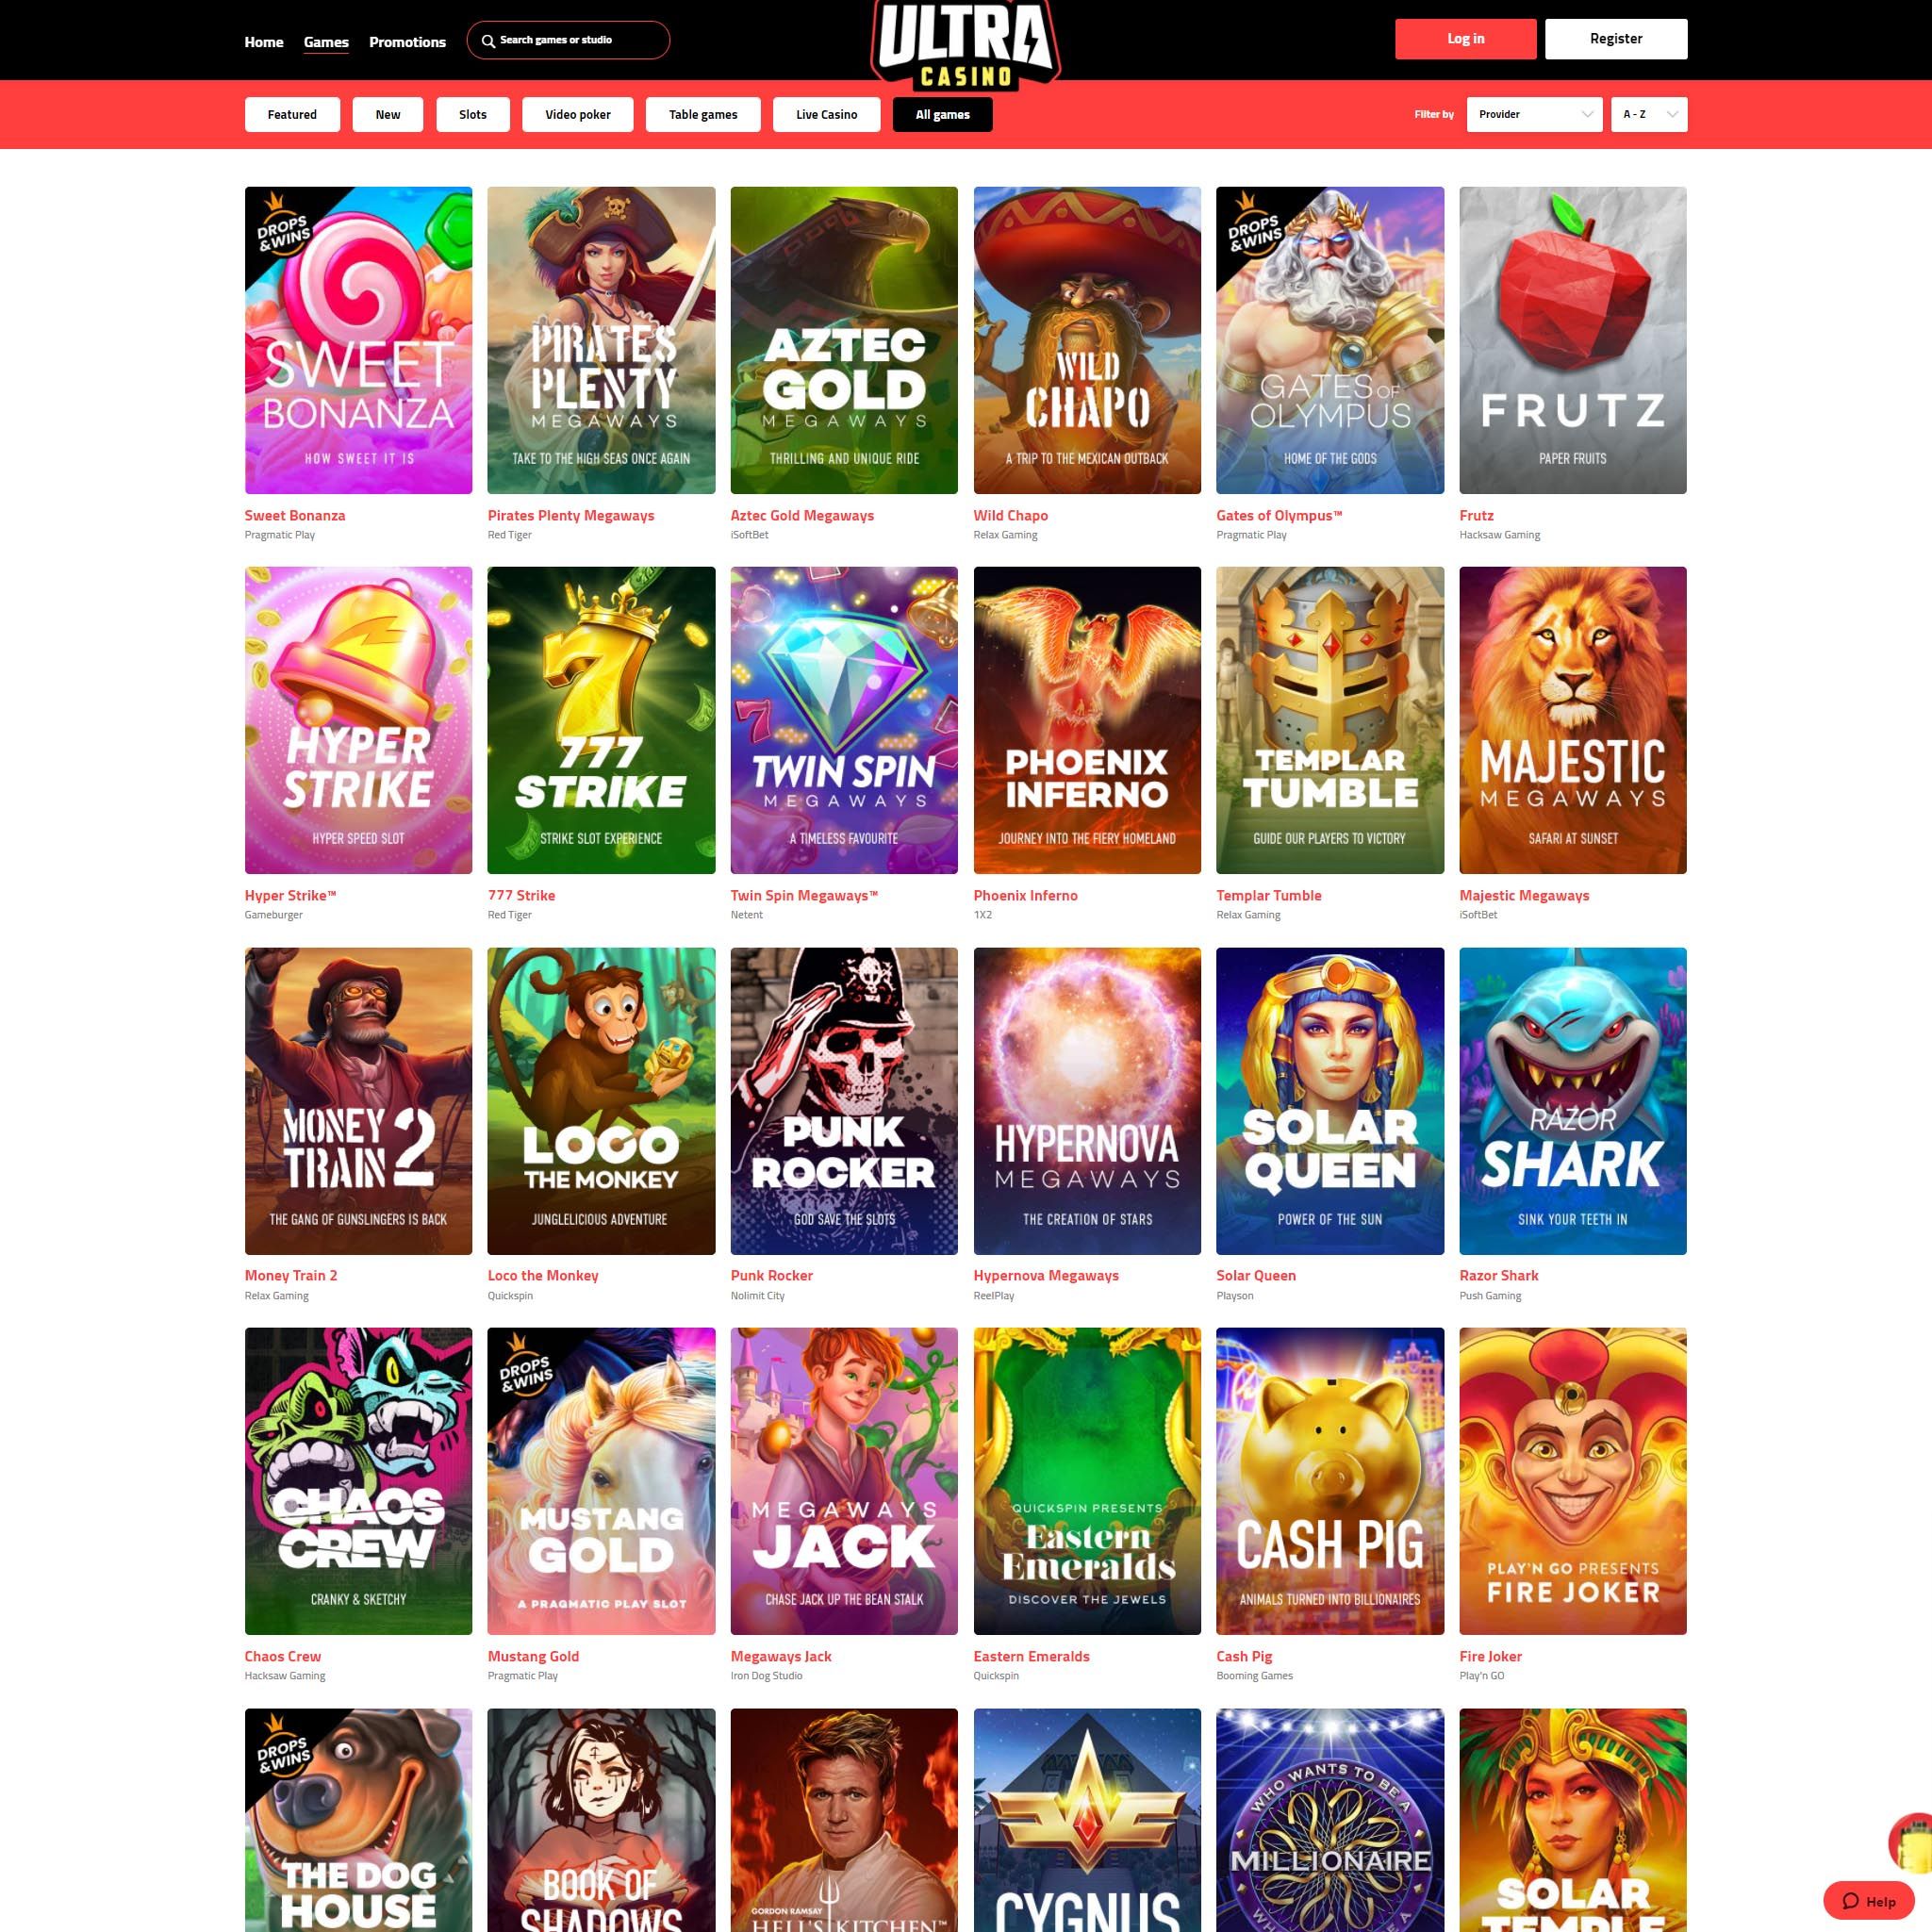 Ultra Casino full games catalogue